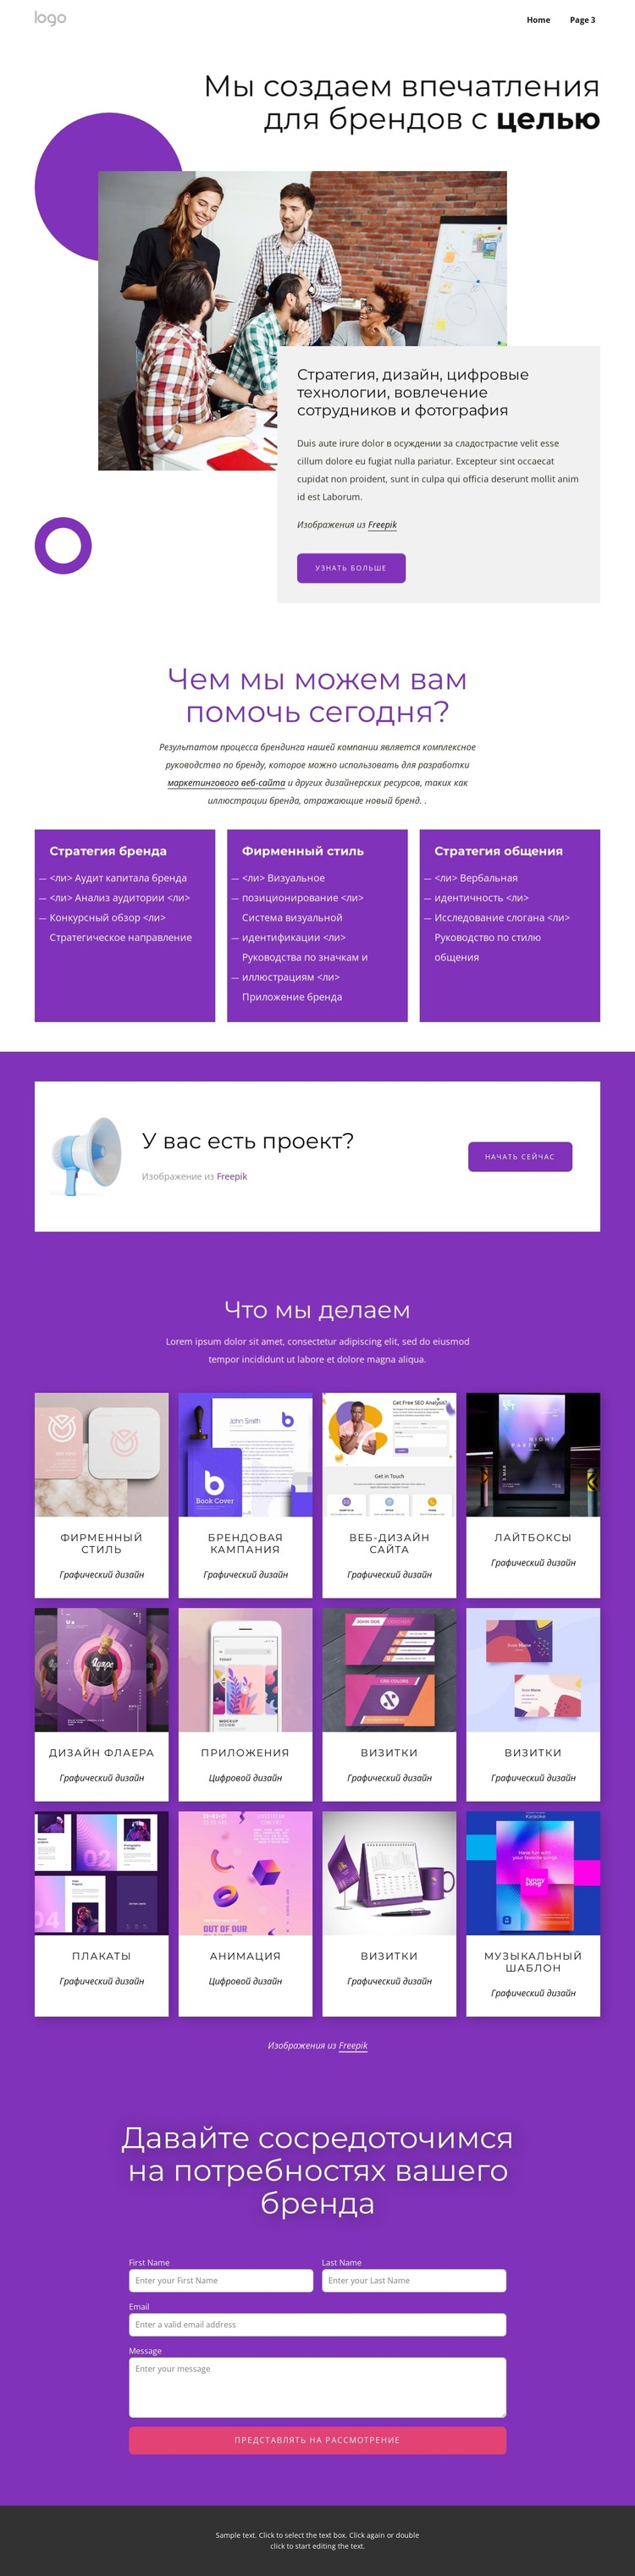 Полный брендинг и веб-дизайн Шаблон веб-сайта